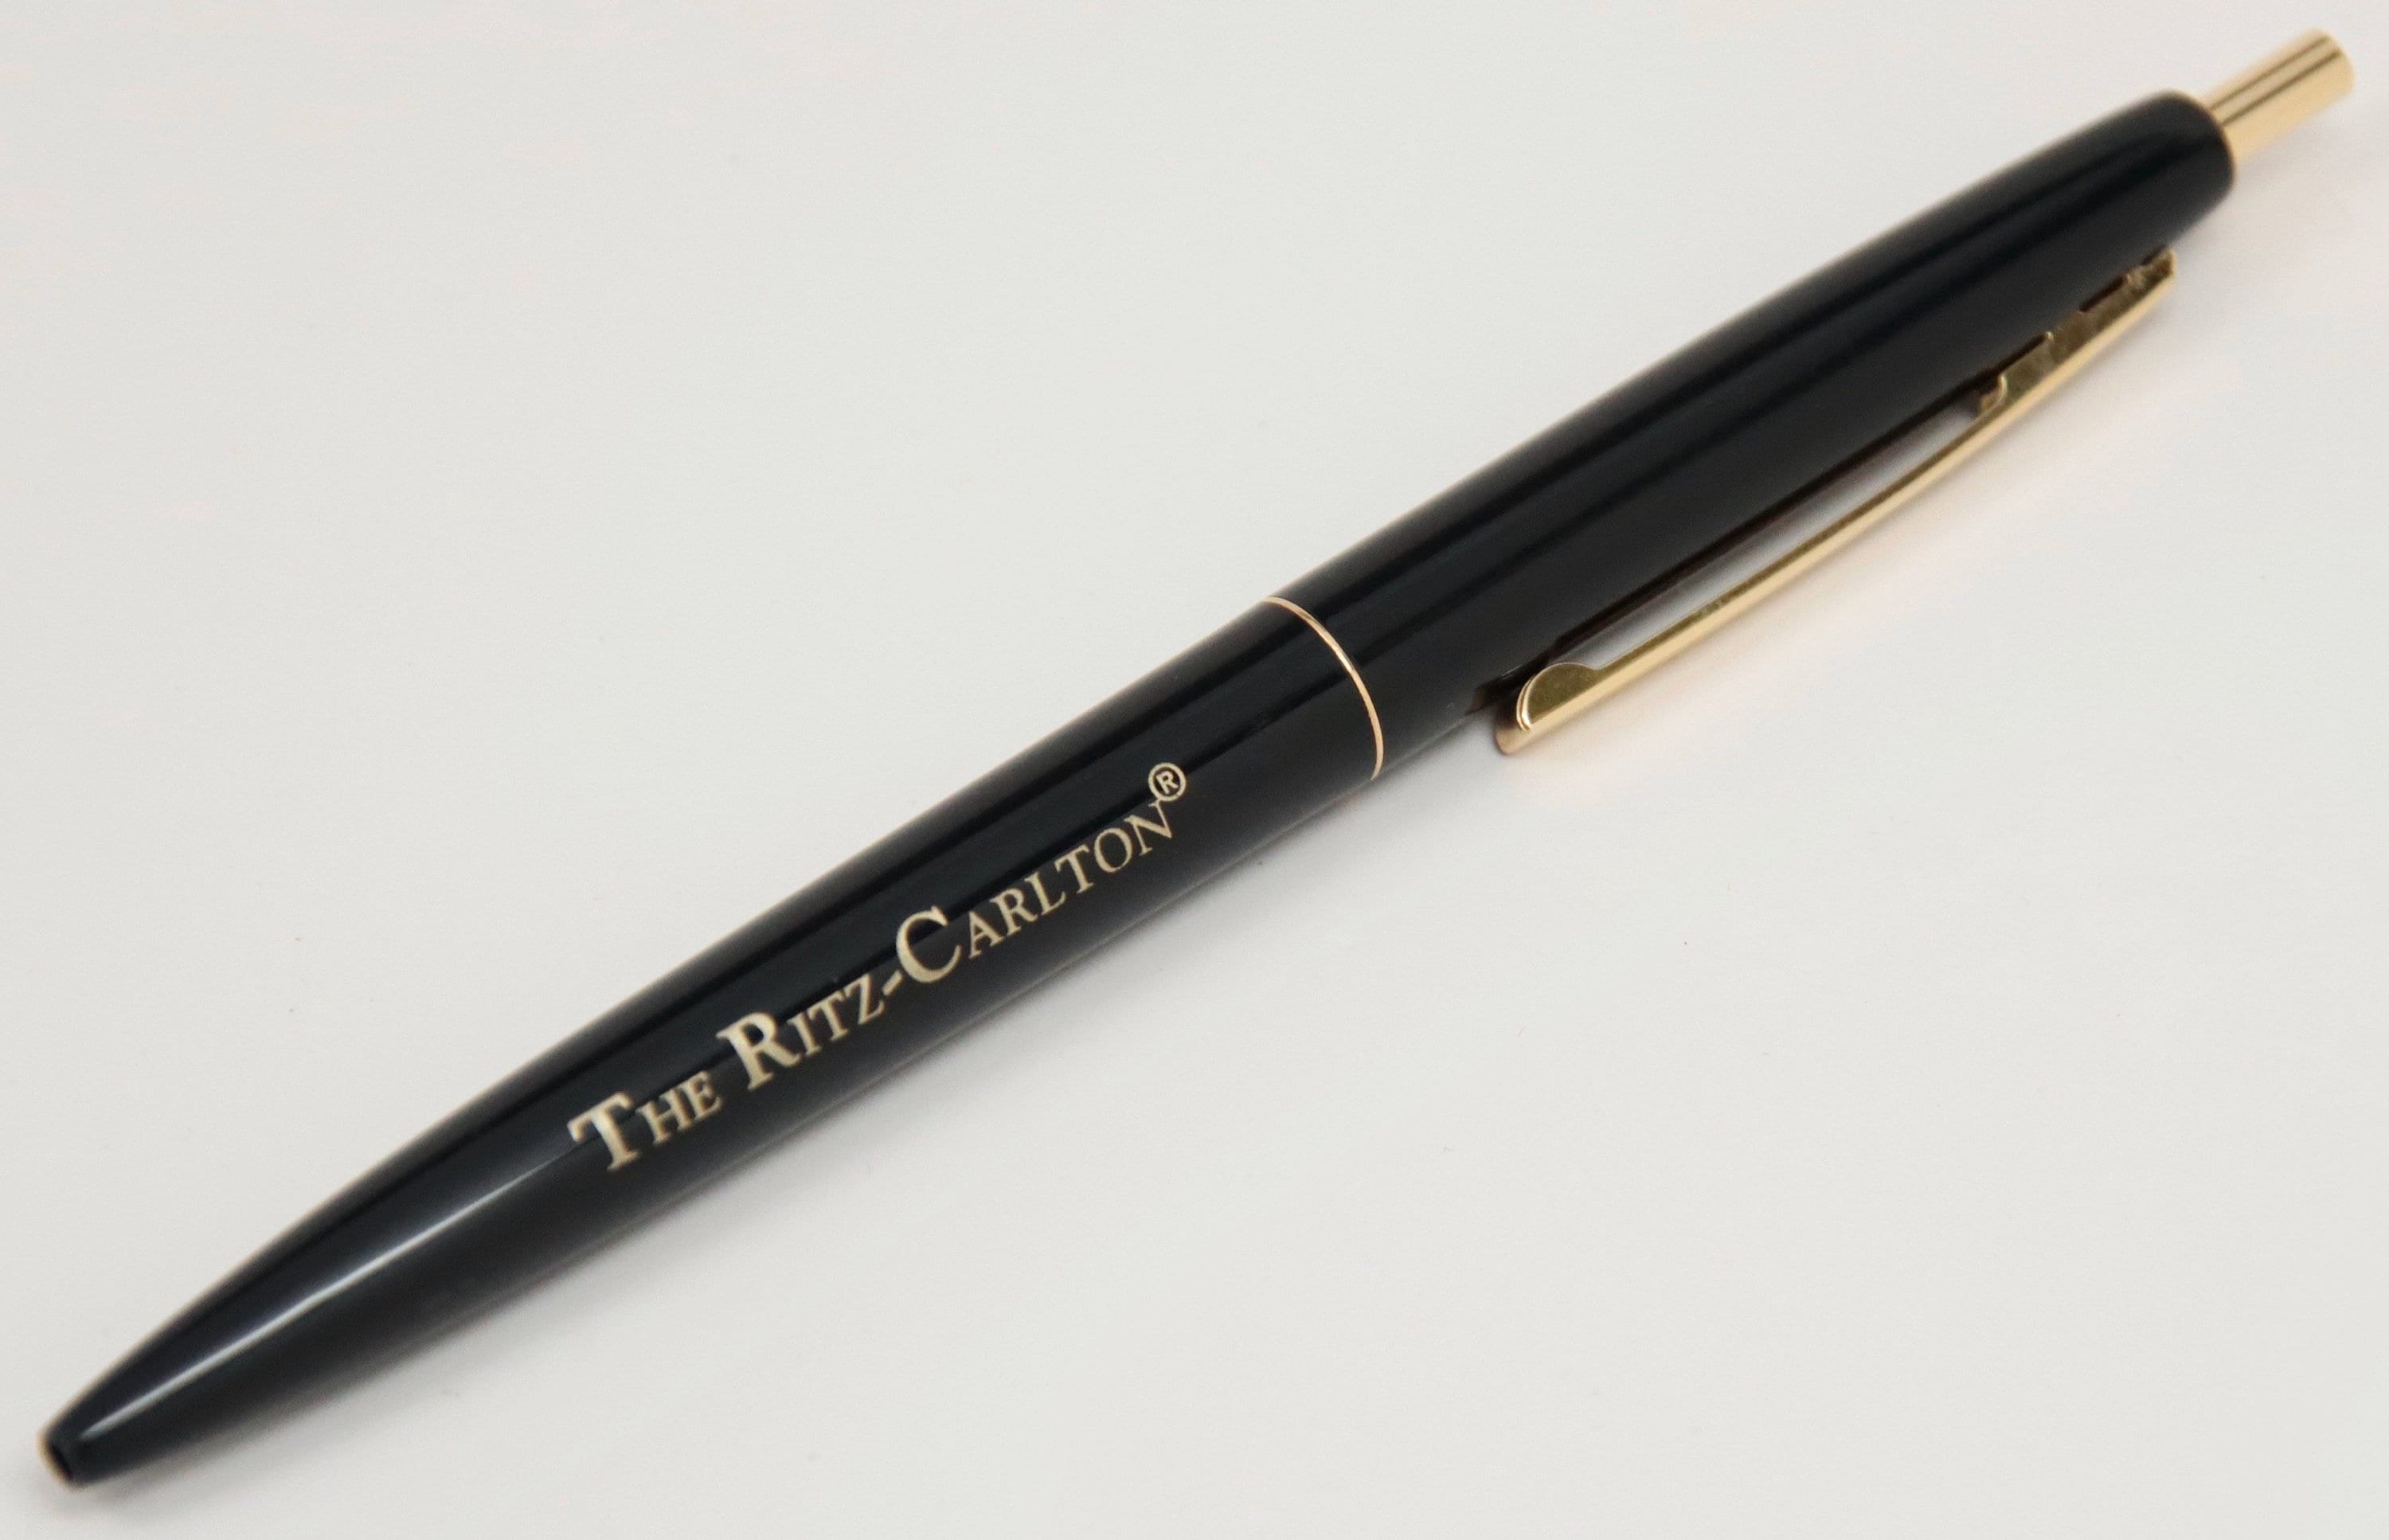 The Ritz Carlton Ink Pens 